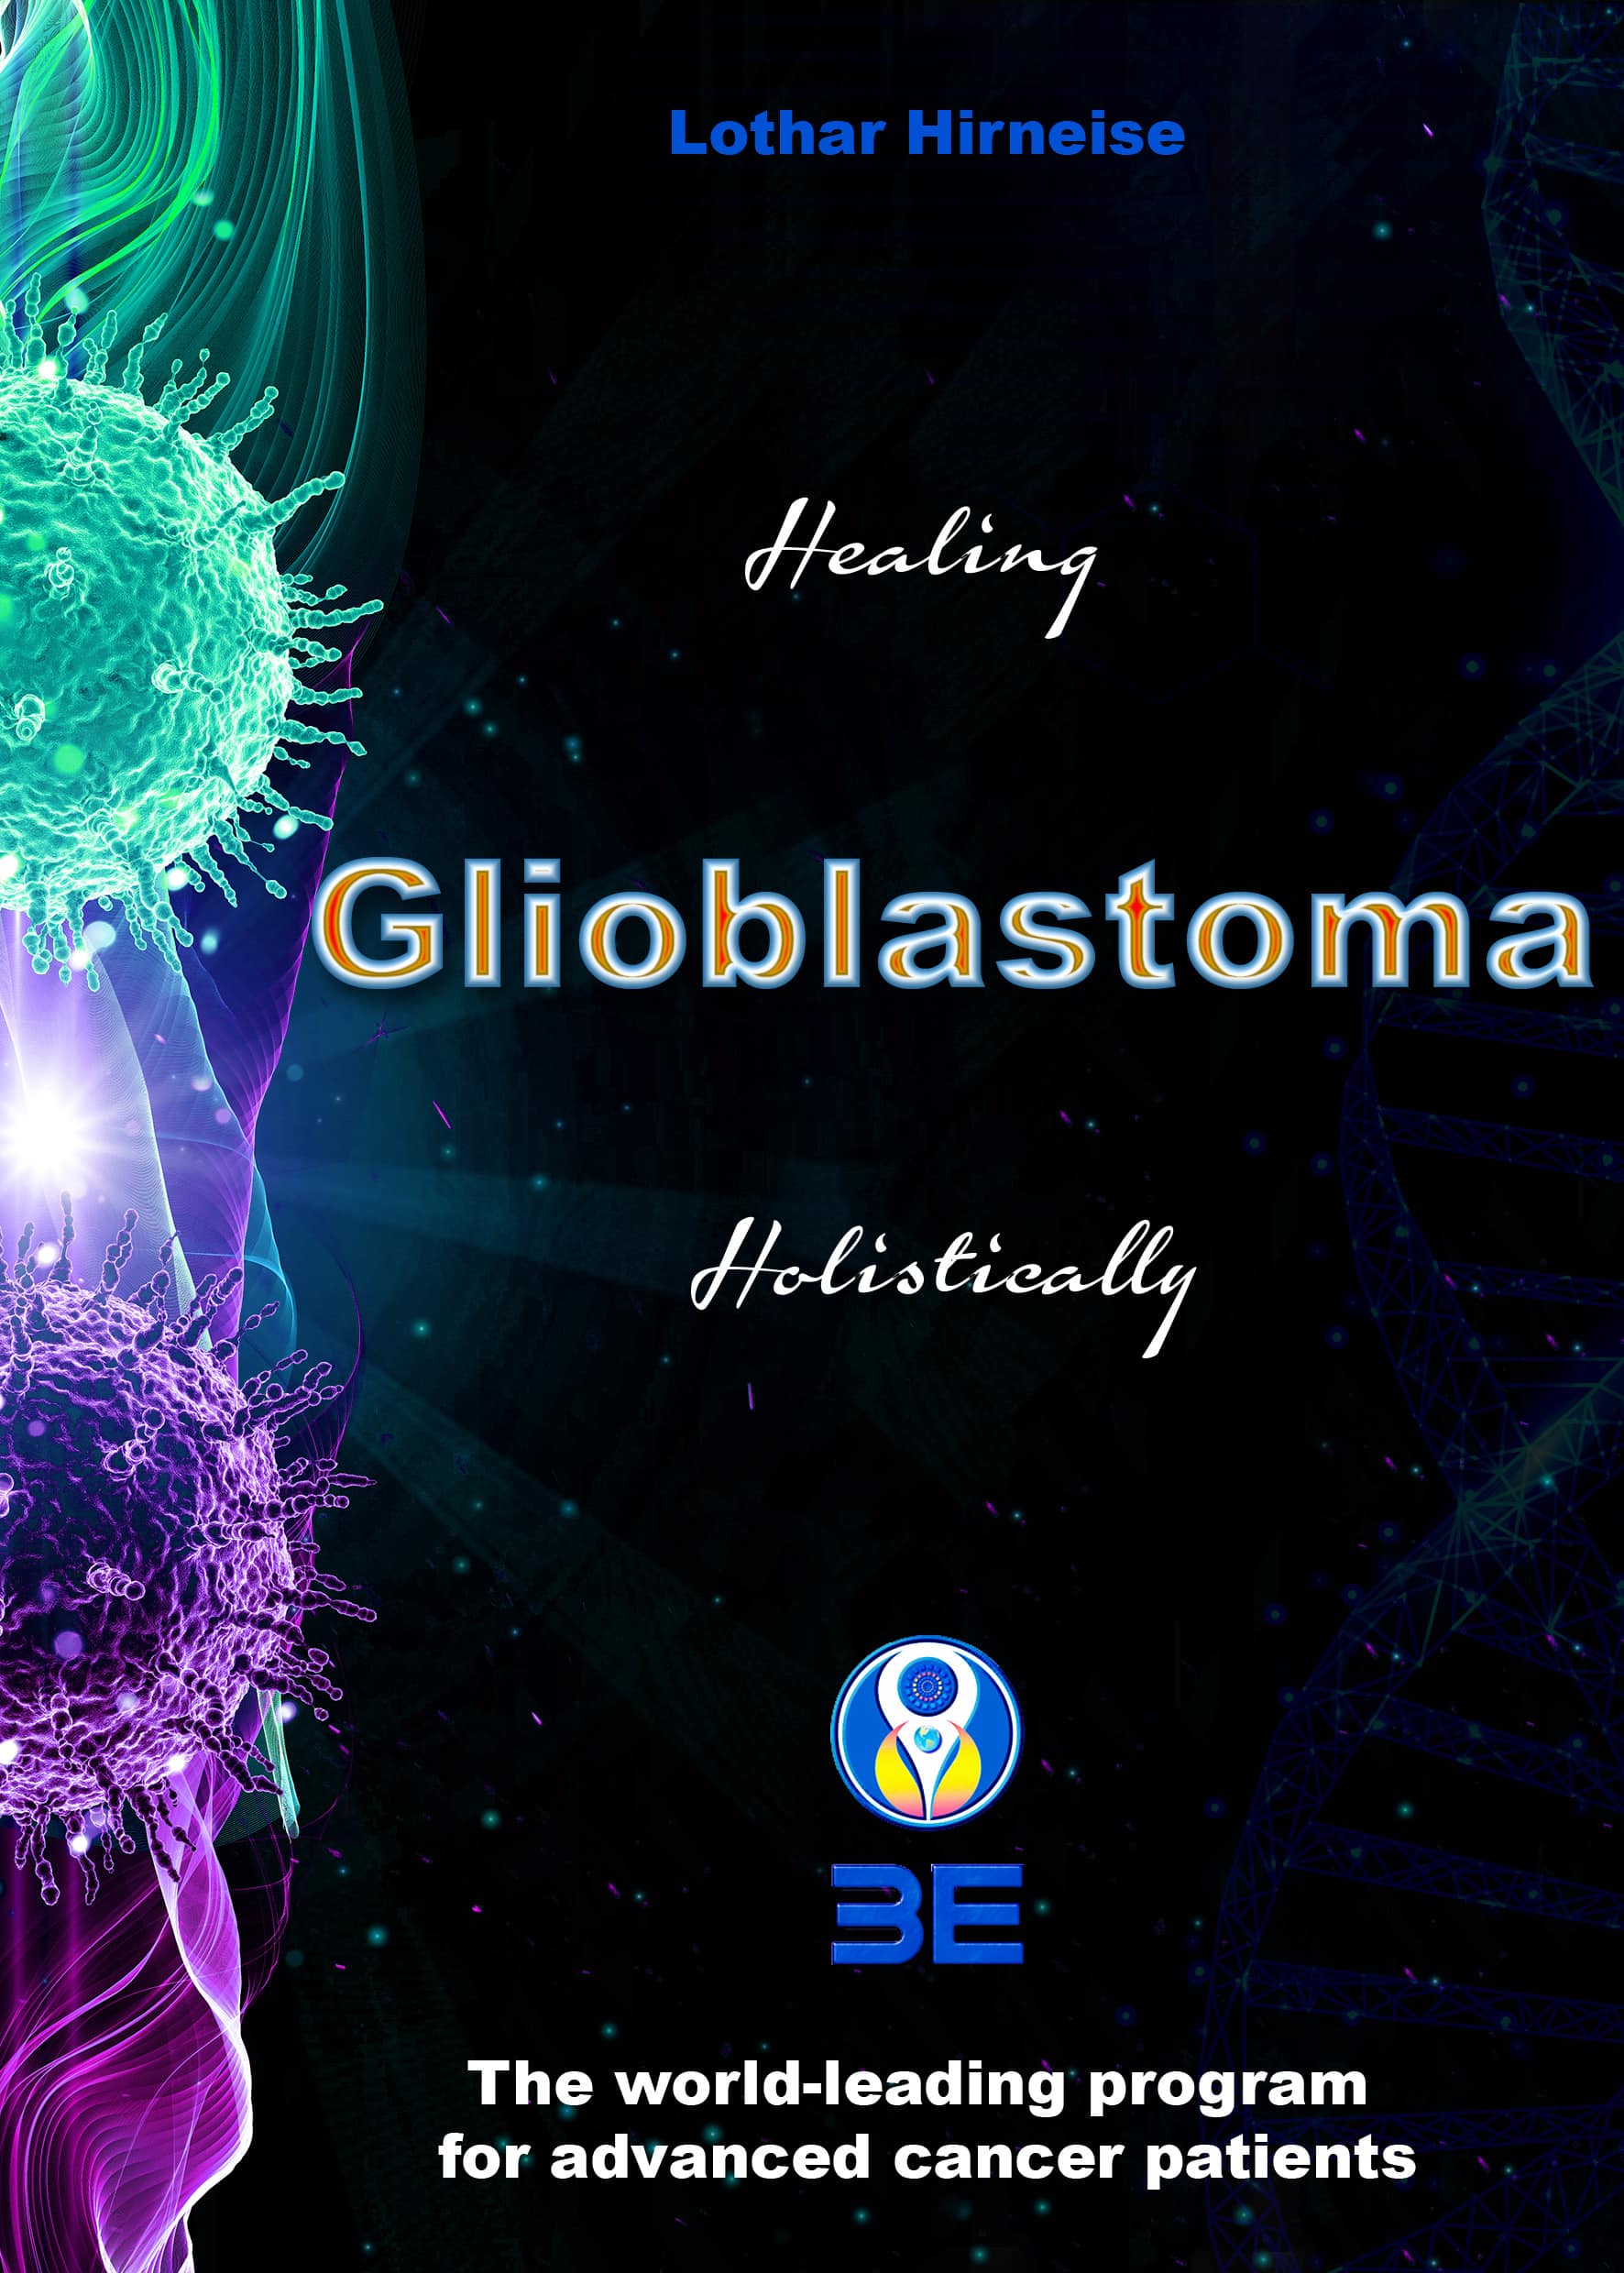 Glioblastoma 